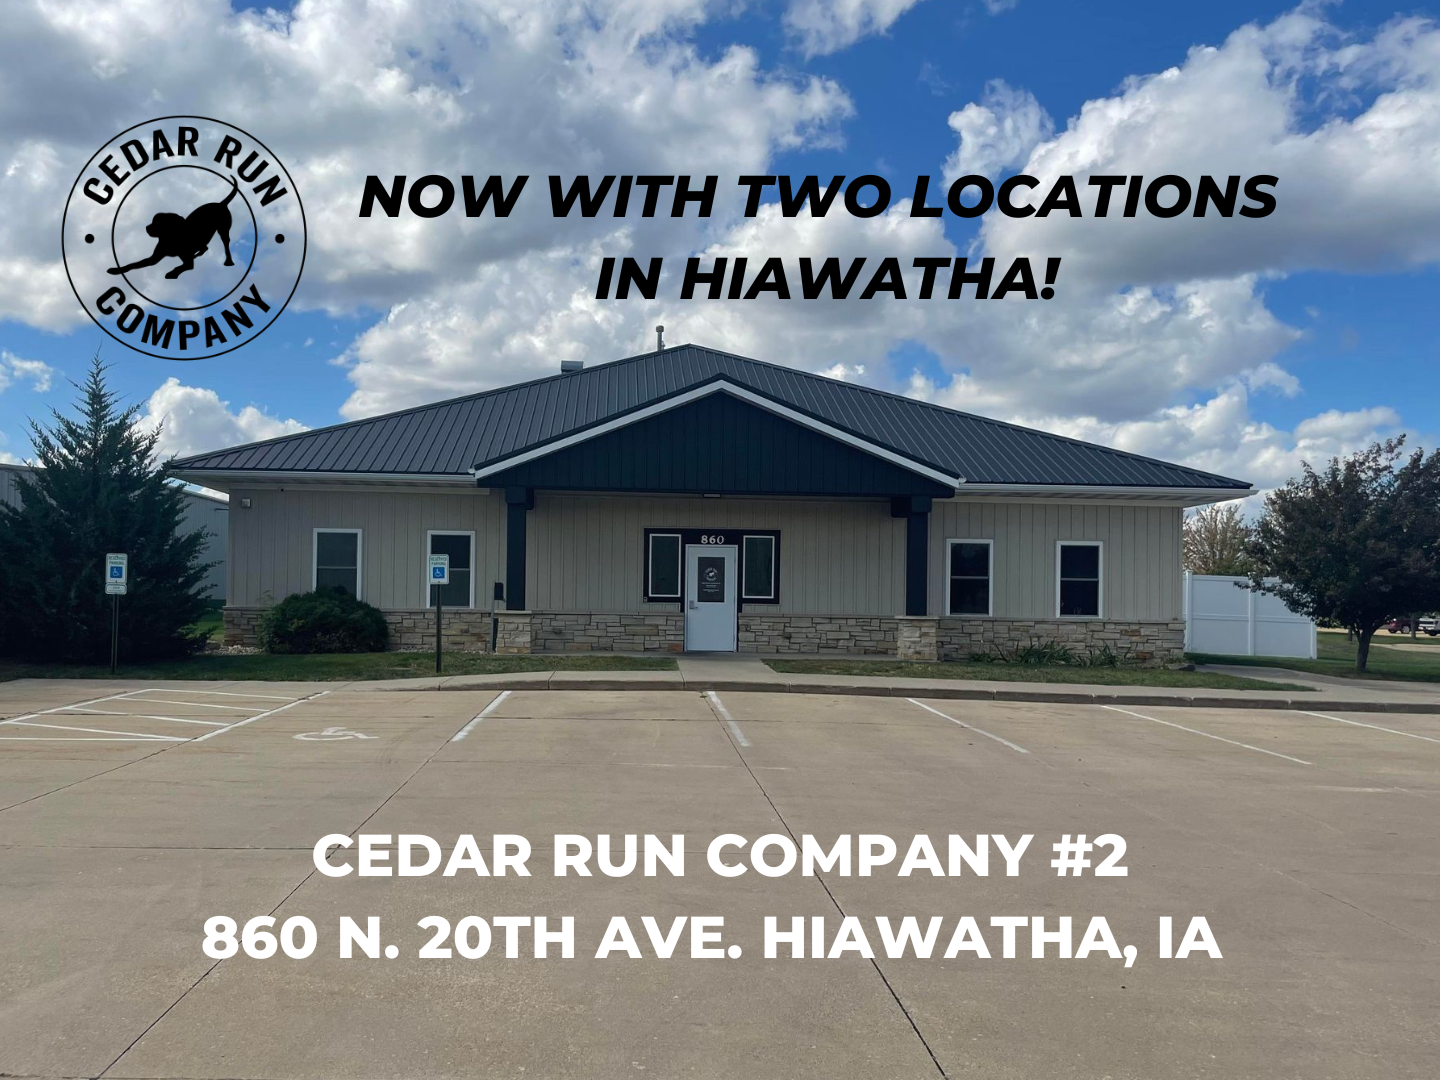 Exterior image of Cedar Run Company #2